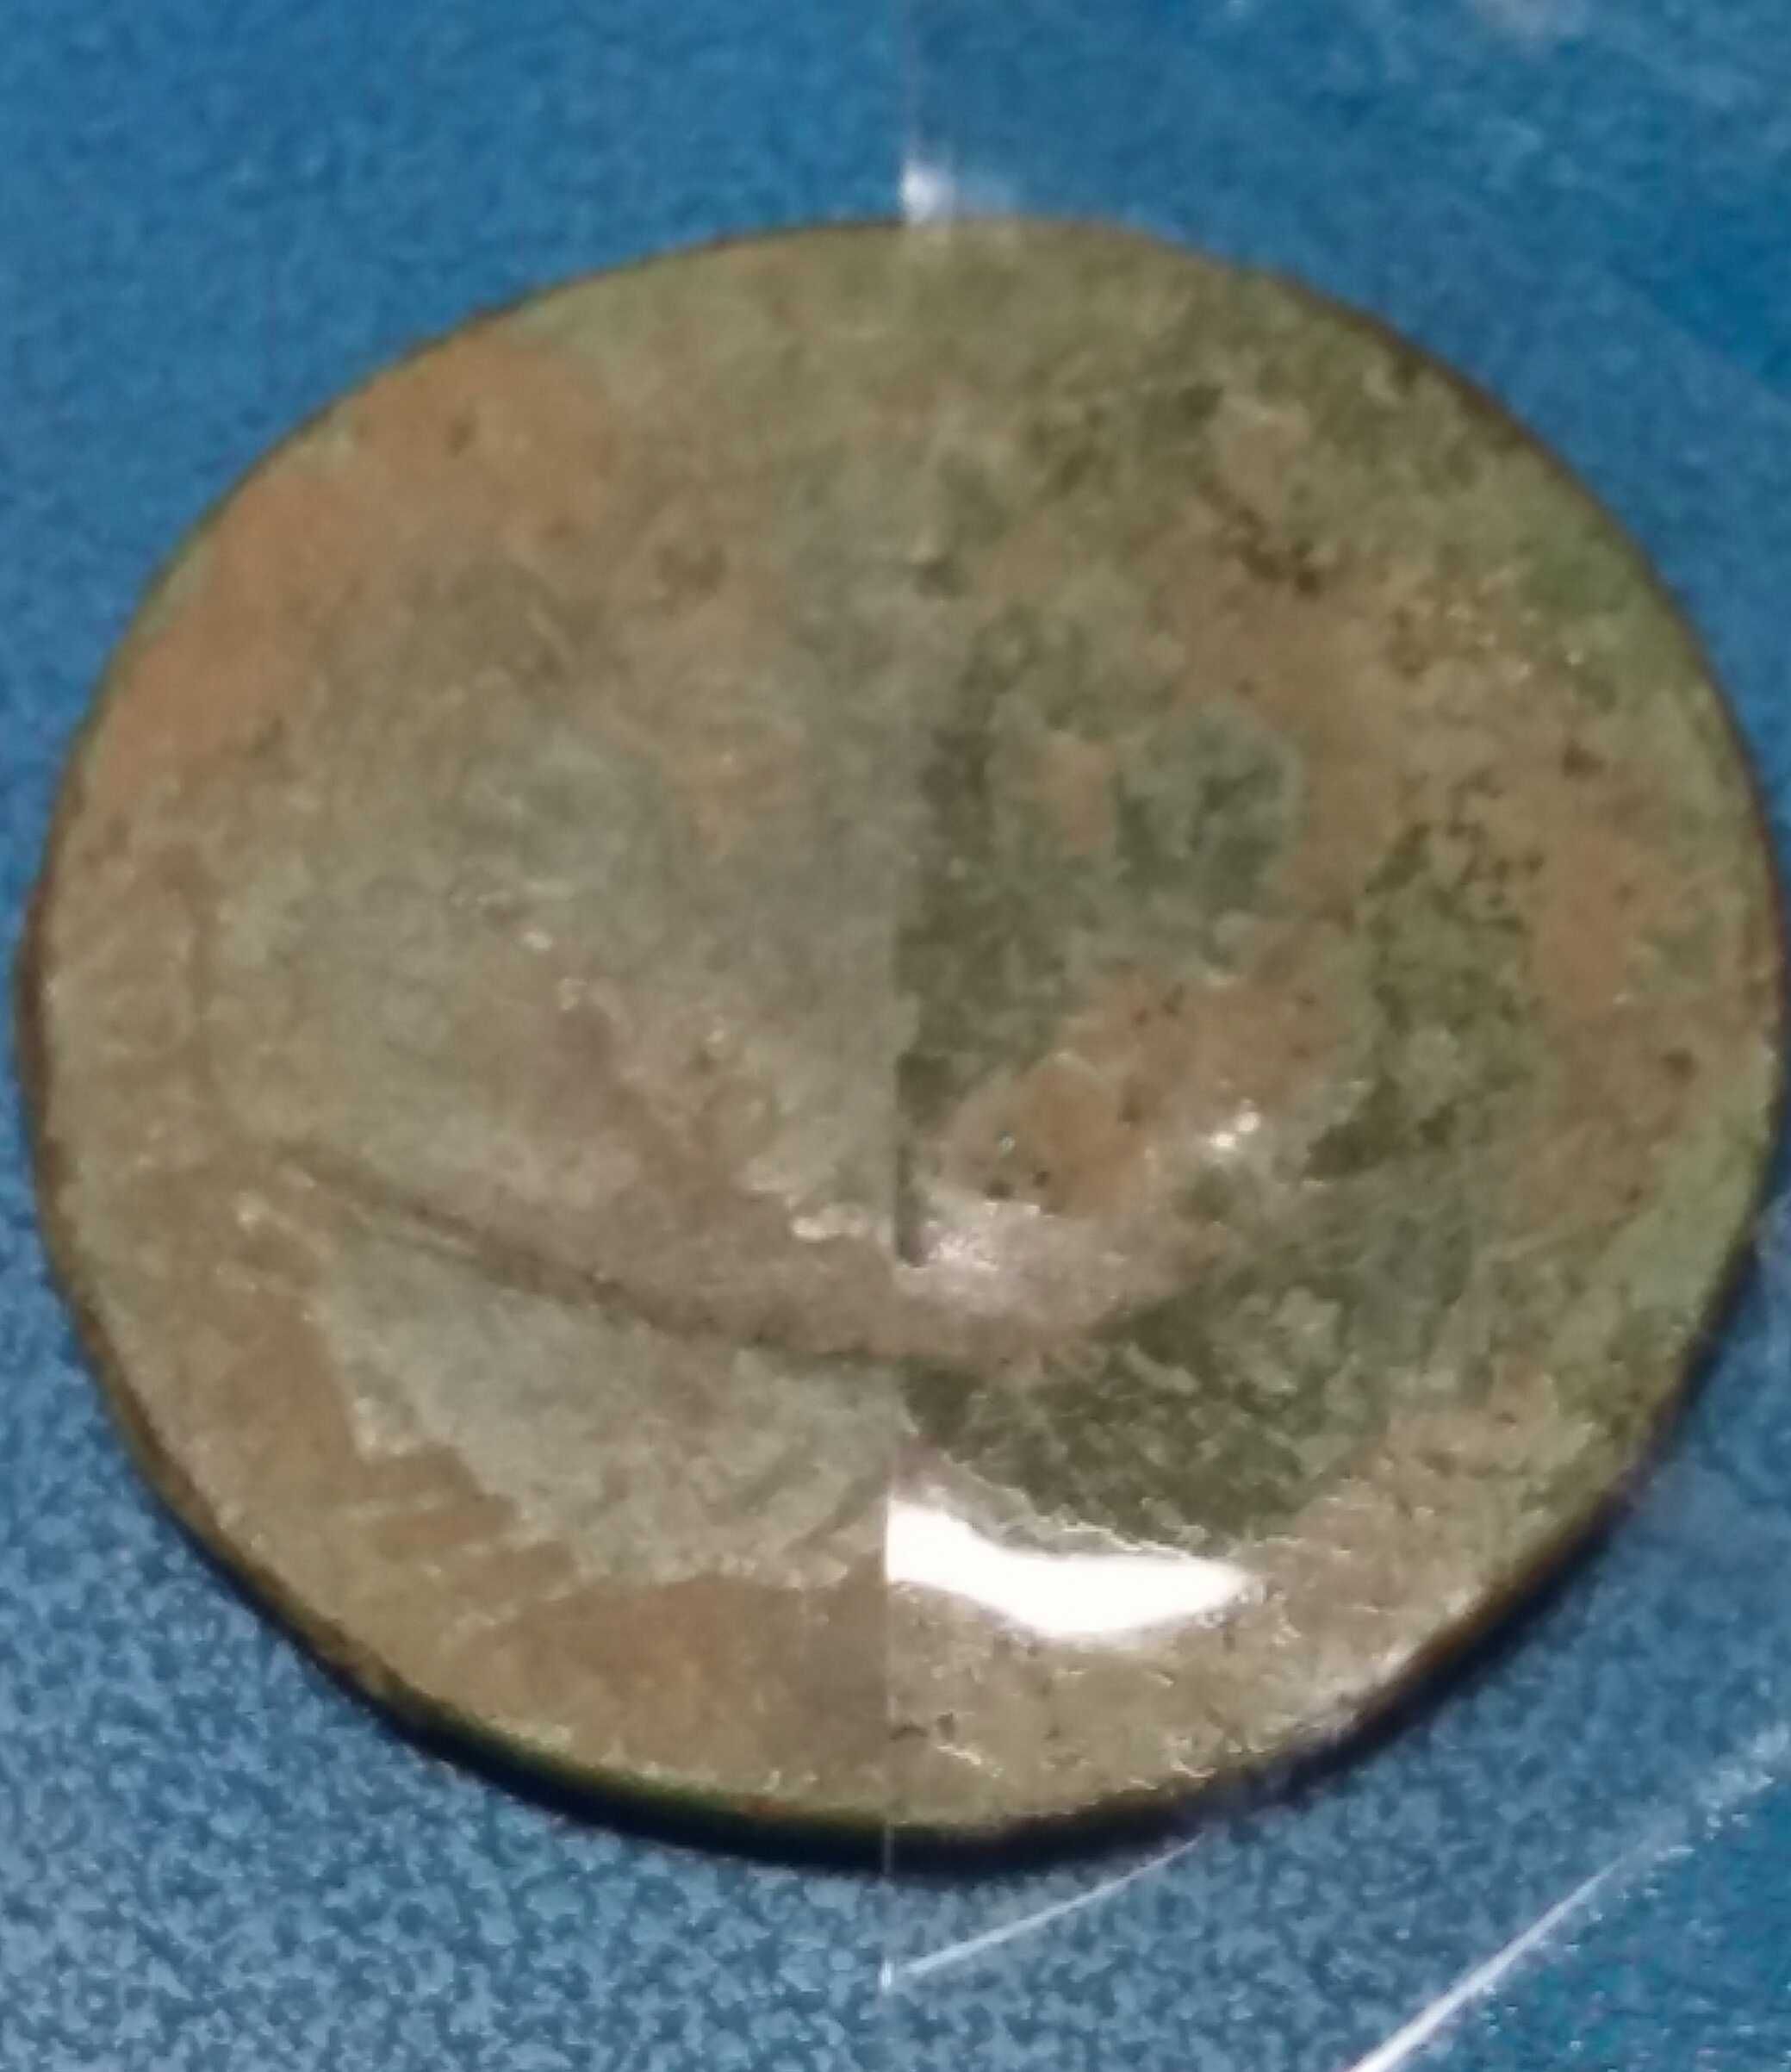 D, Polska 1 grosz skrętka 1794 stara moneta Galicja Lodomeria starocie